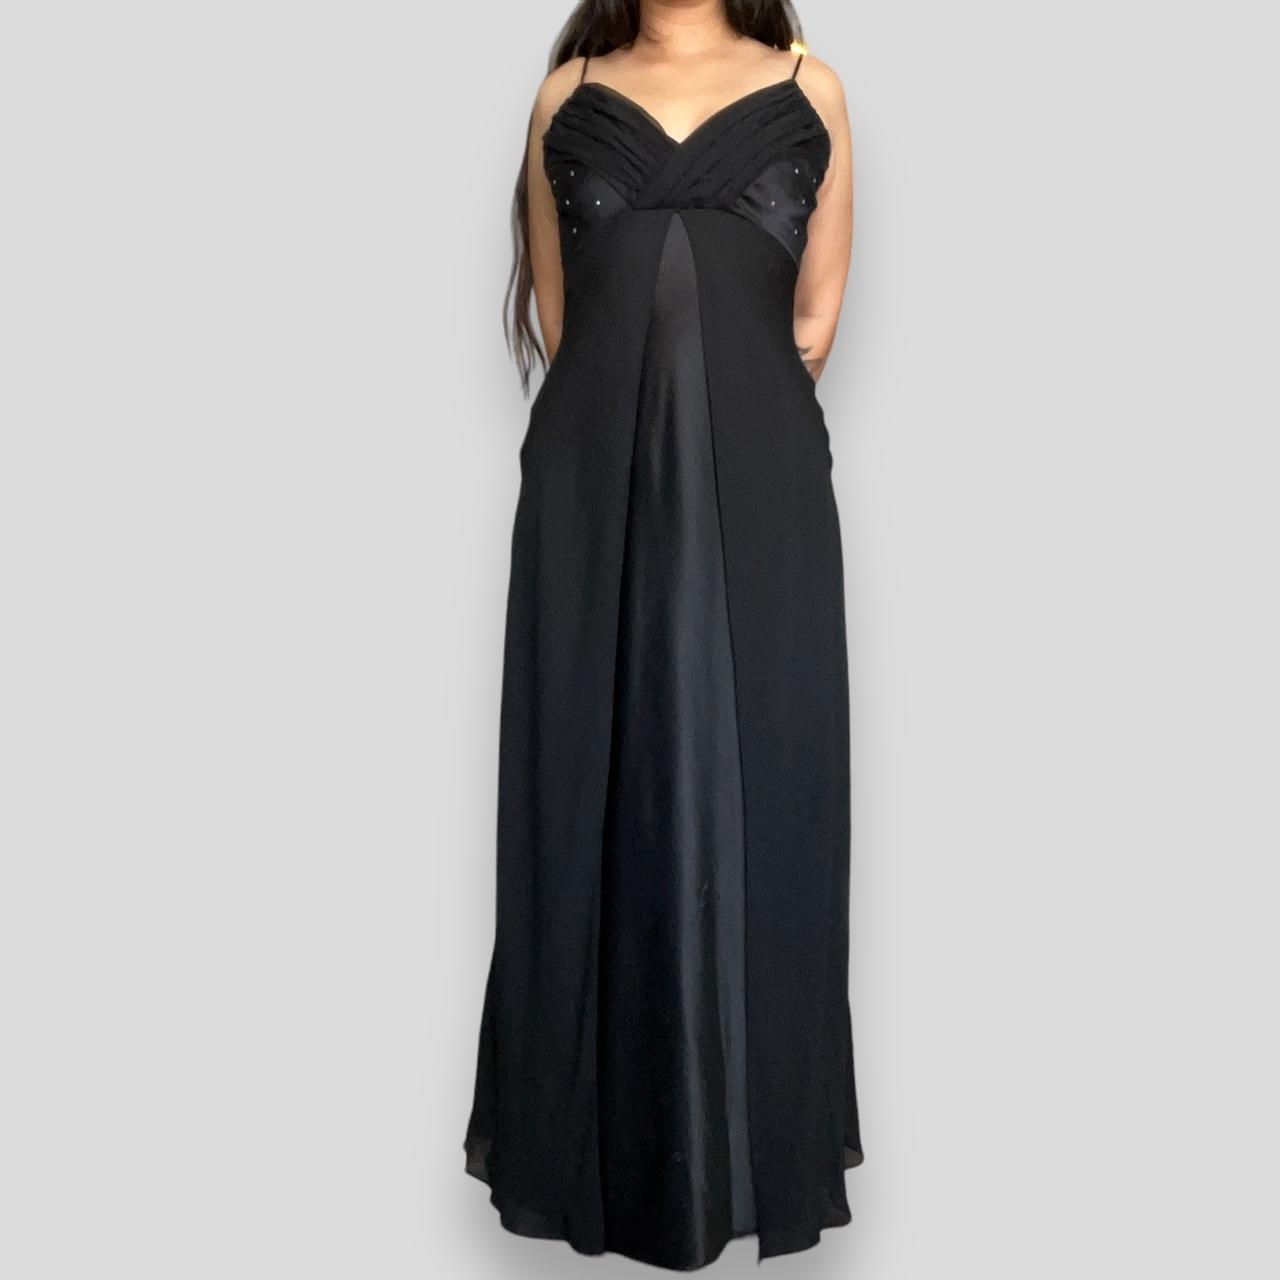 Aspeed Design Women's Black Dress (2)